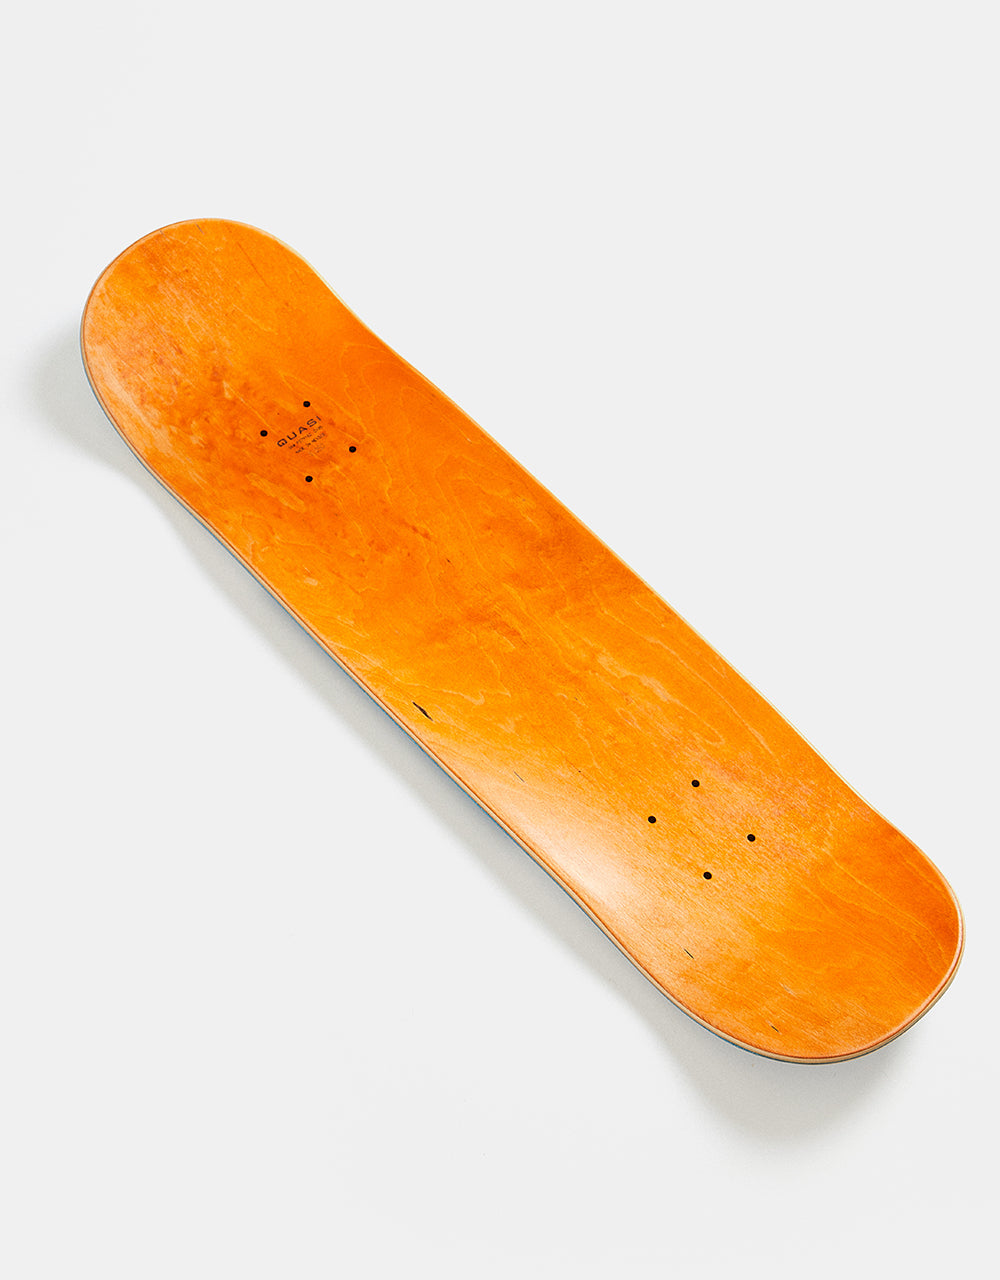 Quasi 'Proto 1' WPB Skateboard Deck - 8.25"